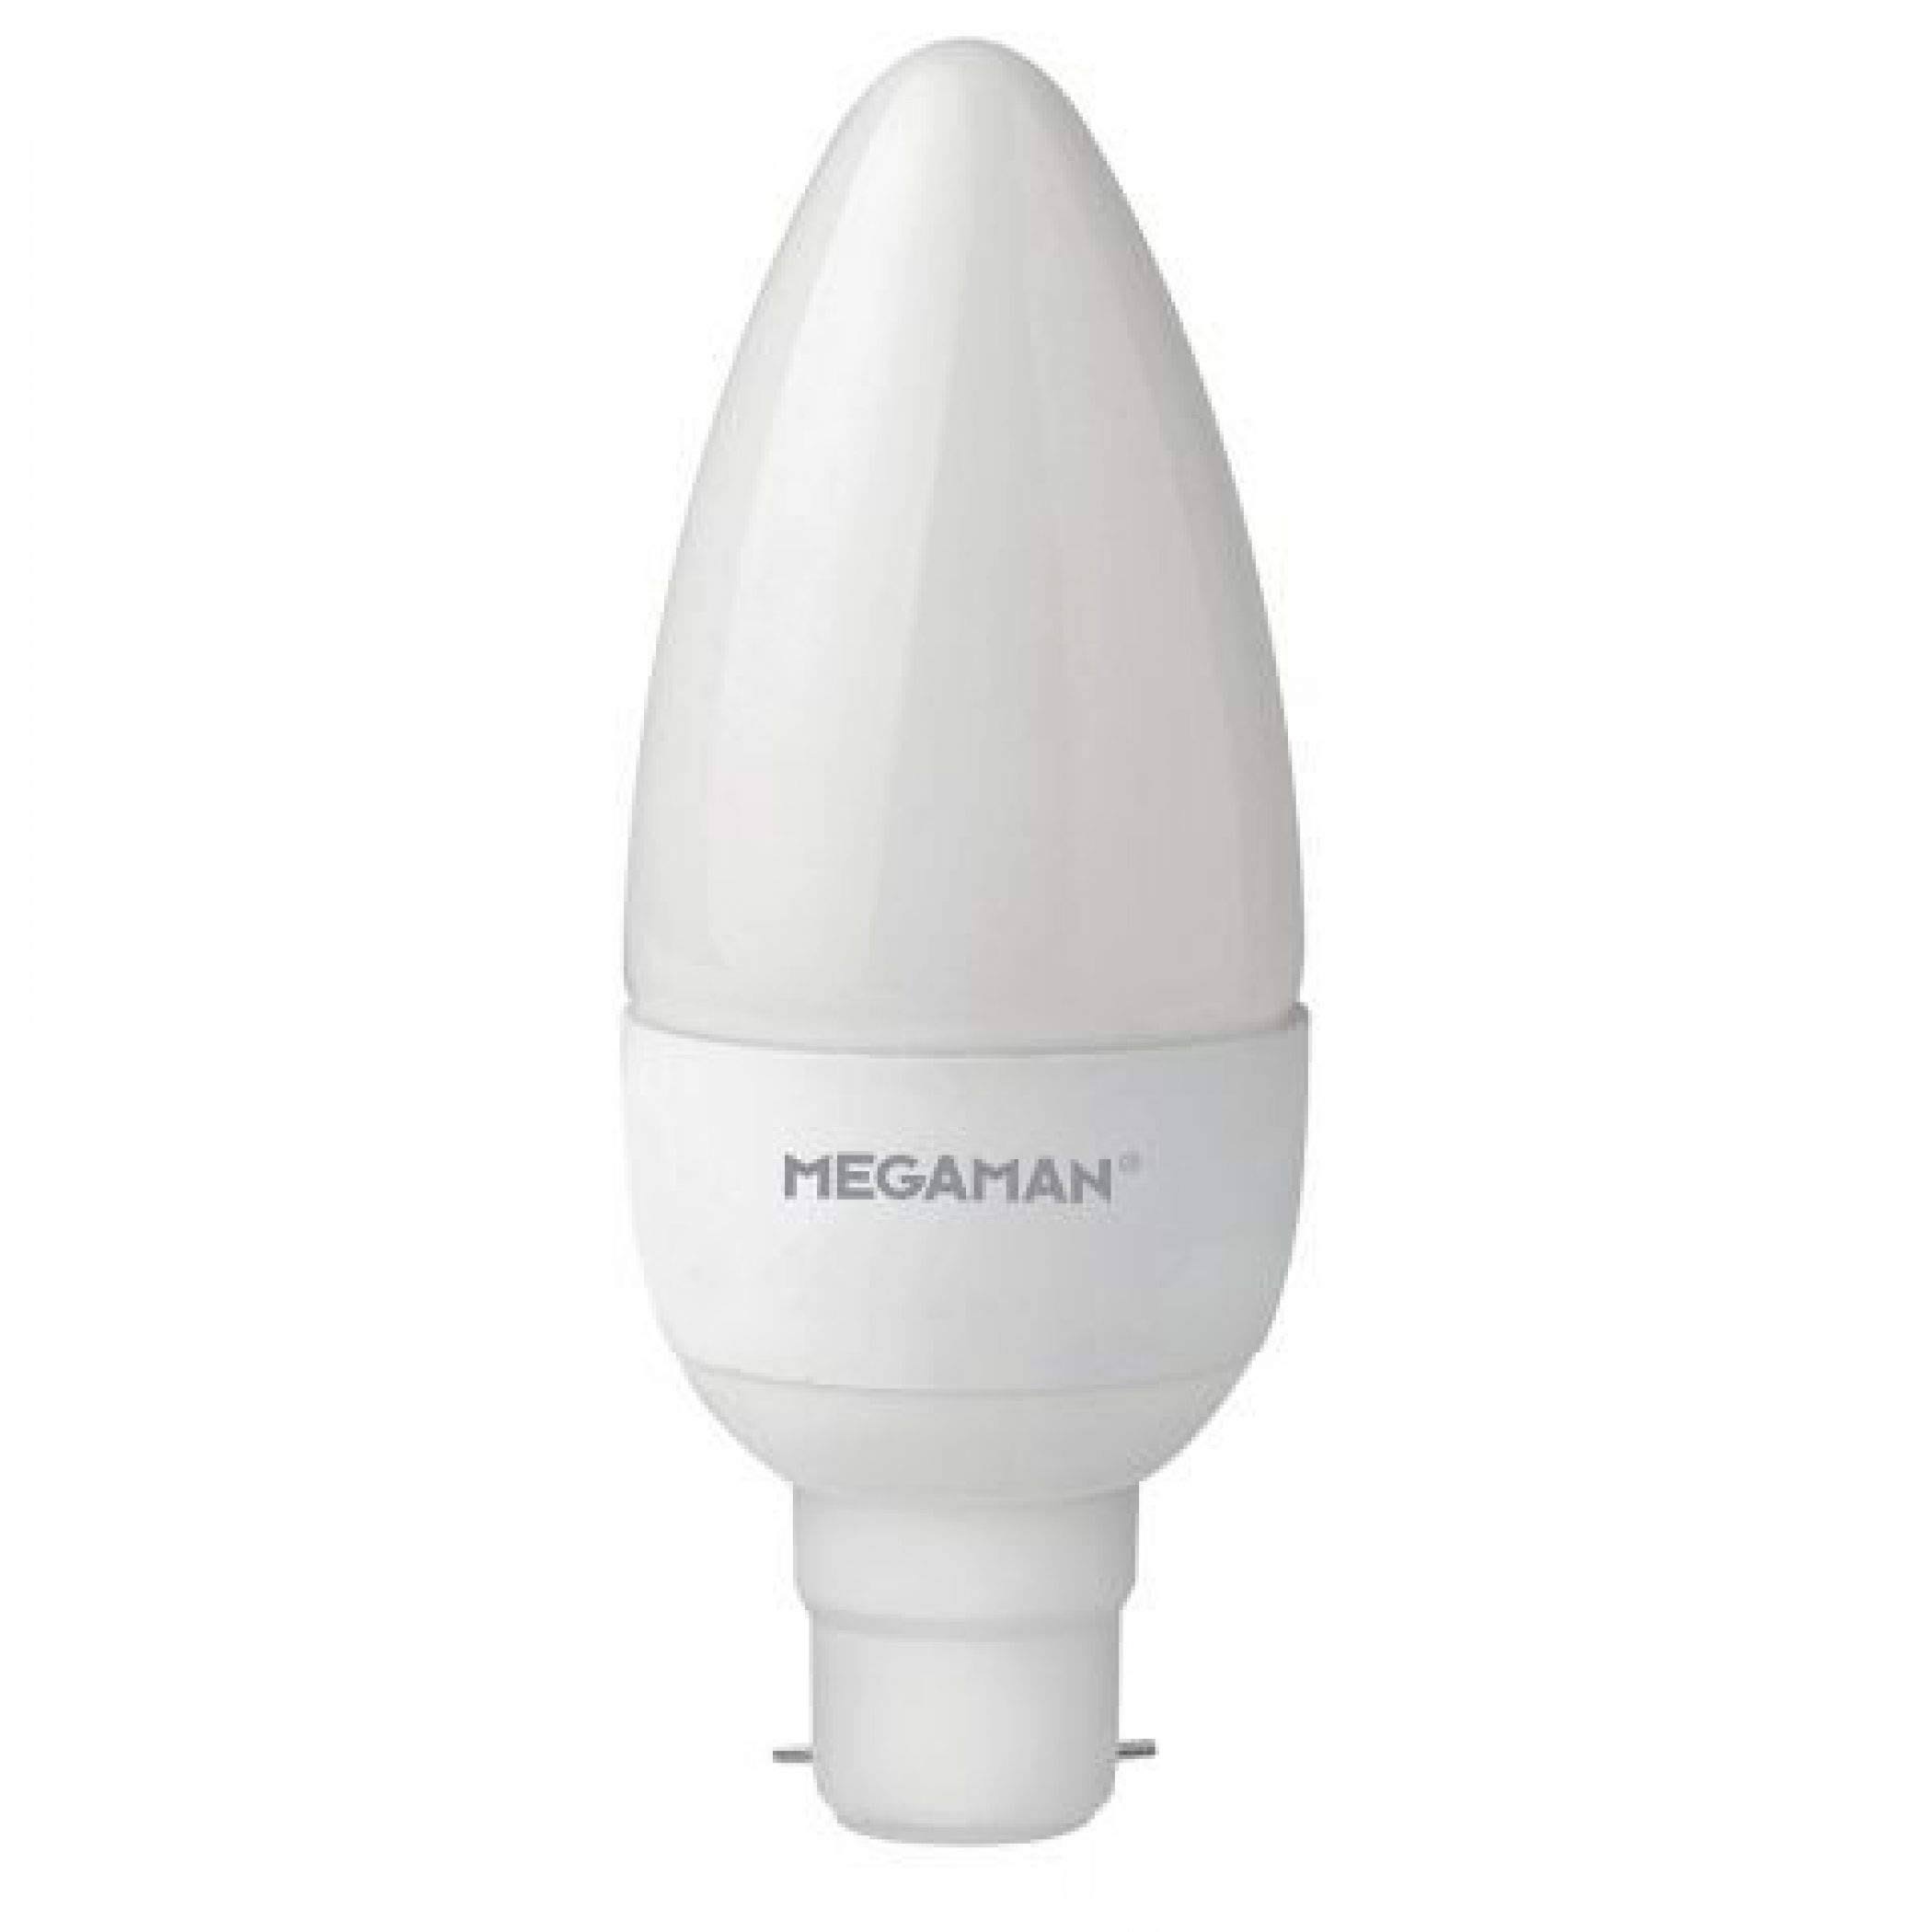 Megaman 143314 LED Candle Light Bulb Opal B22 BC 2800K Warm White 5.5W